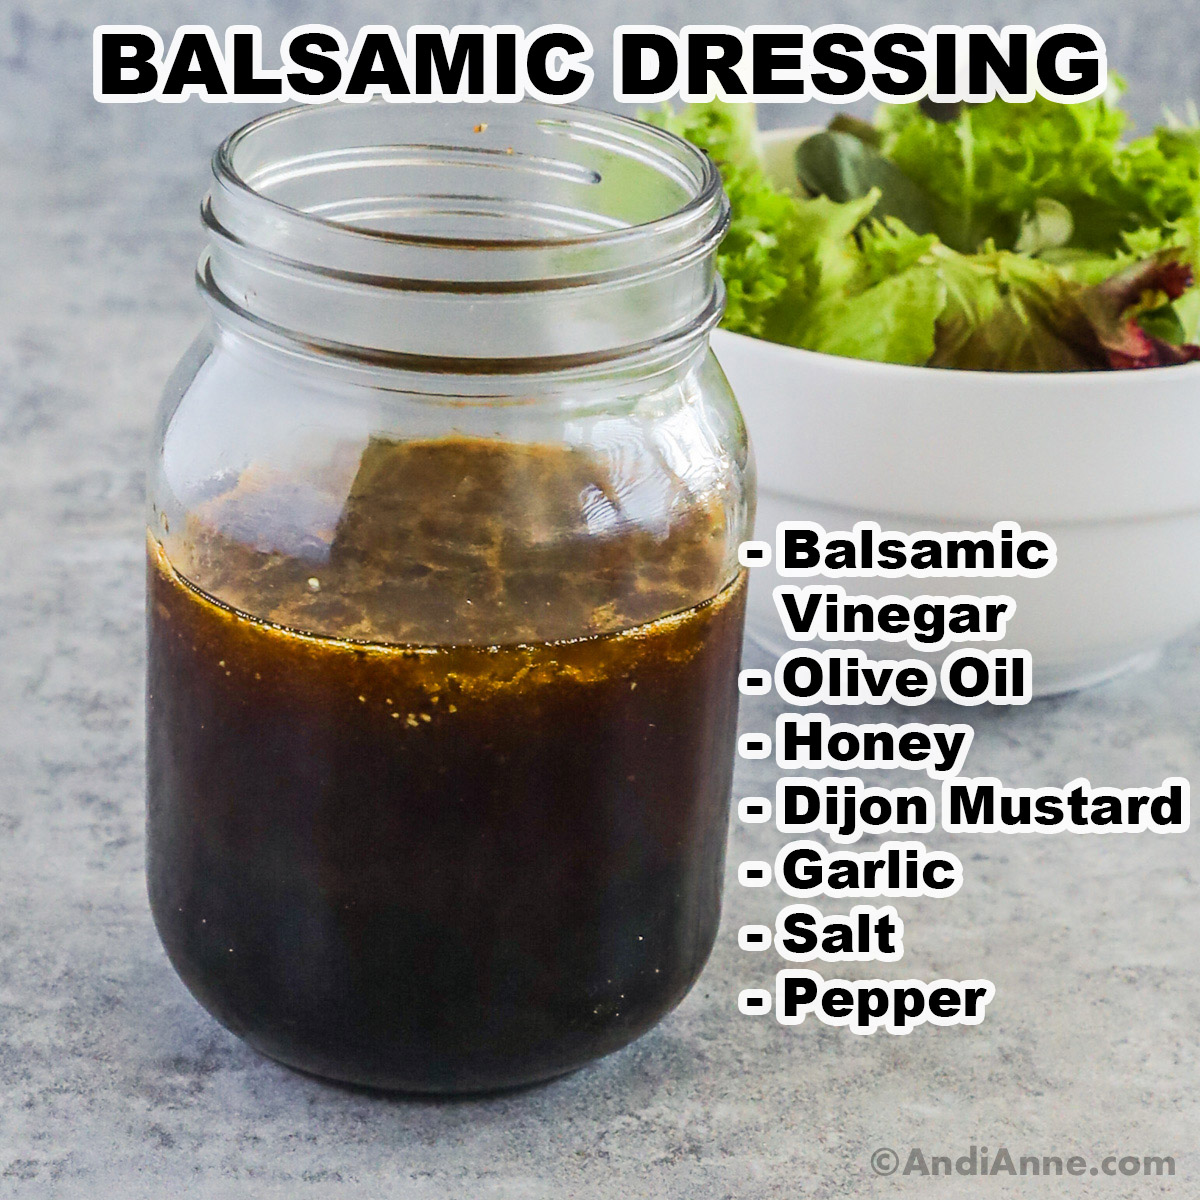 A jar of balsamic dressing with ingredients listed including balsamic vinegar, olive oil, honey, dijon mustard, garlic, salt, pepper.